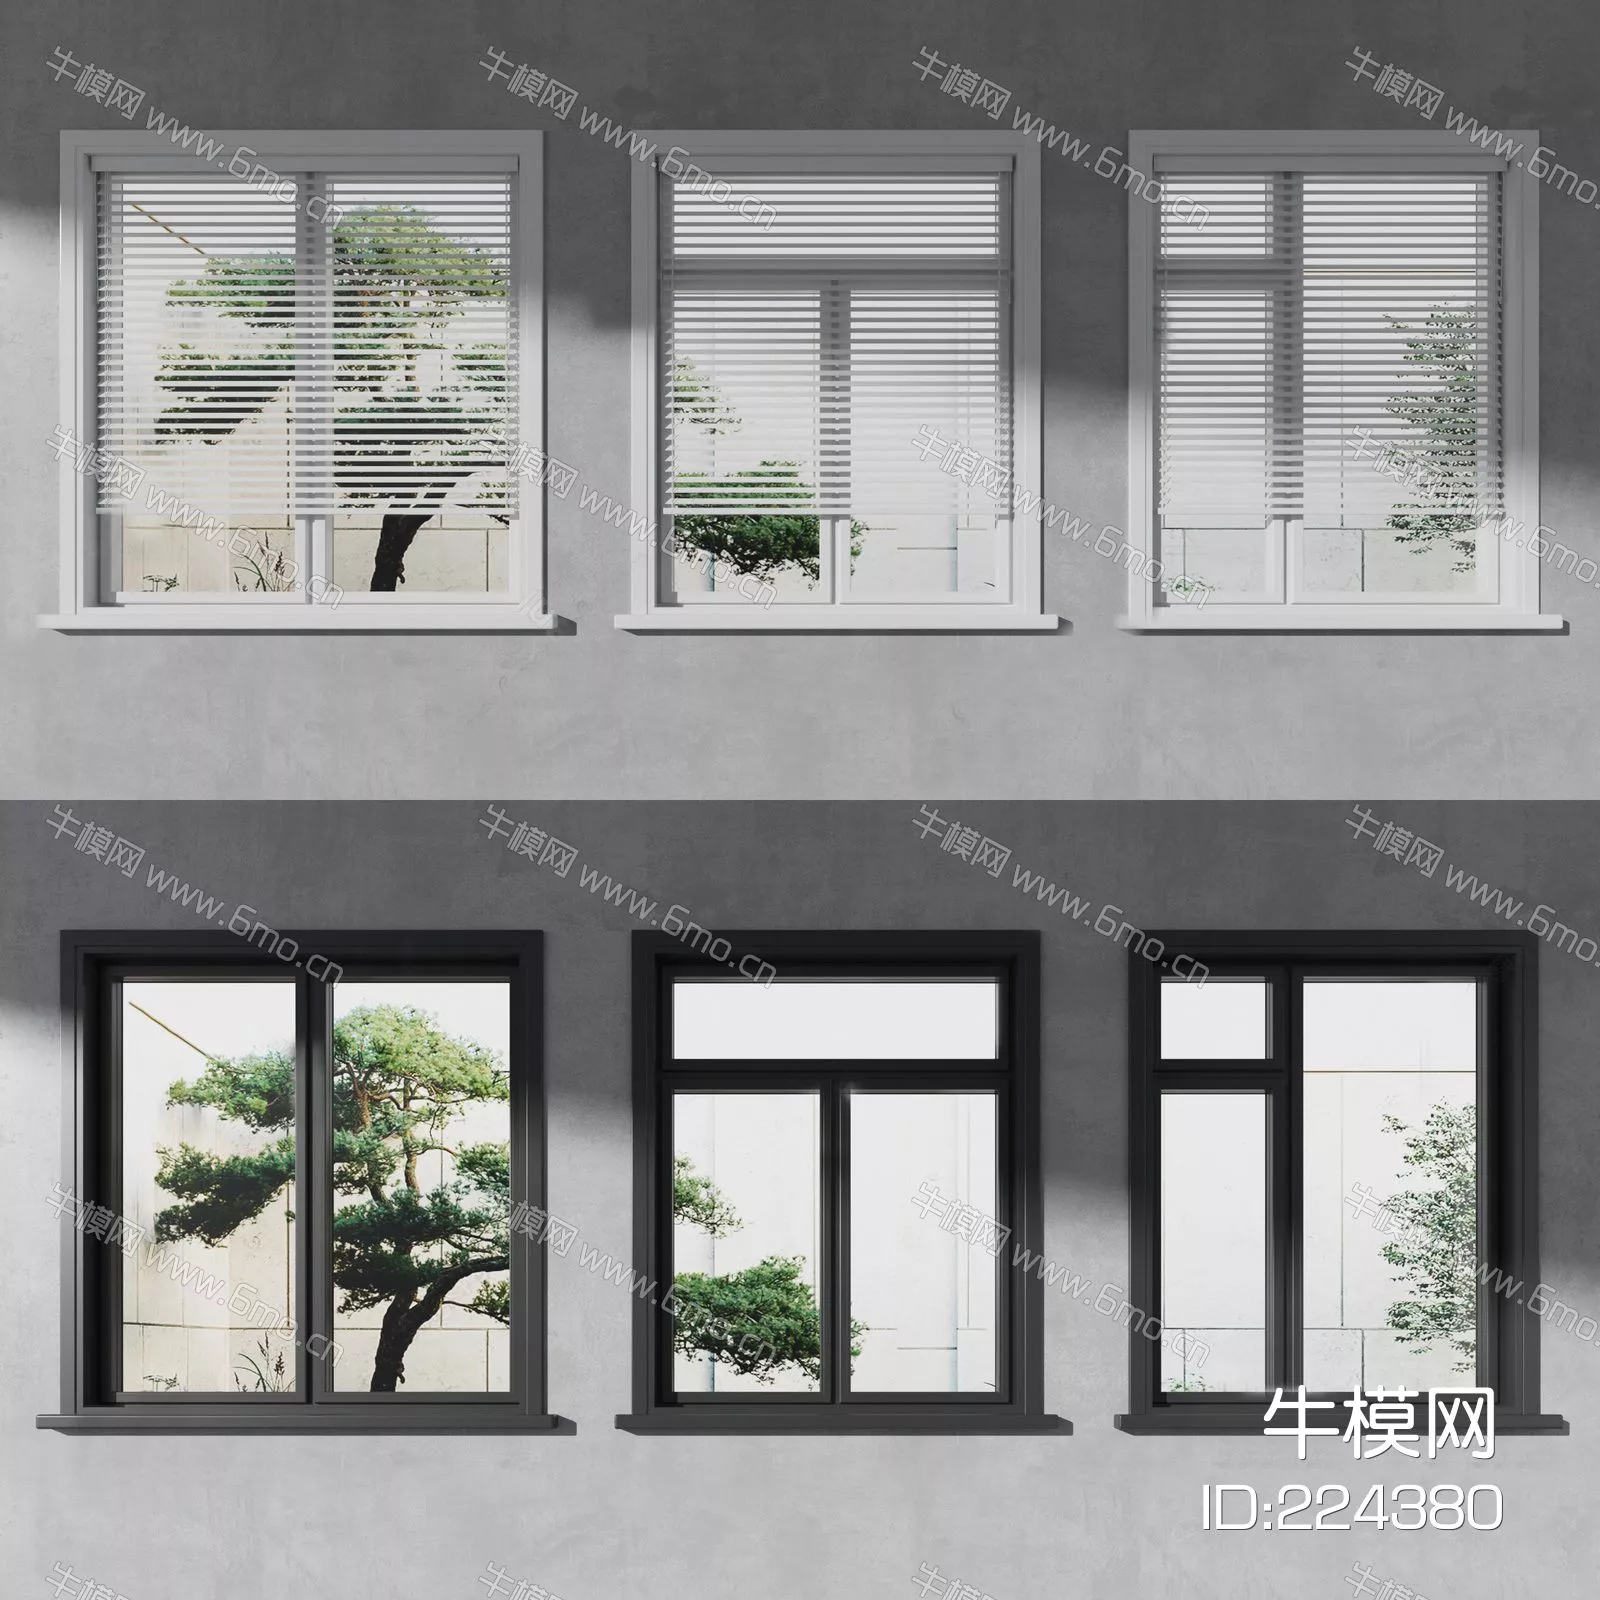 MODERN DOOR AND WINDOWS - SKETCHUP 3D MODEL - ENSCAPE - 224380